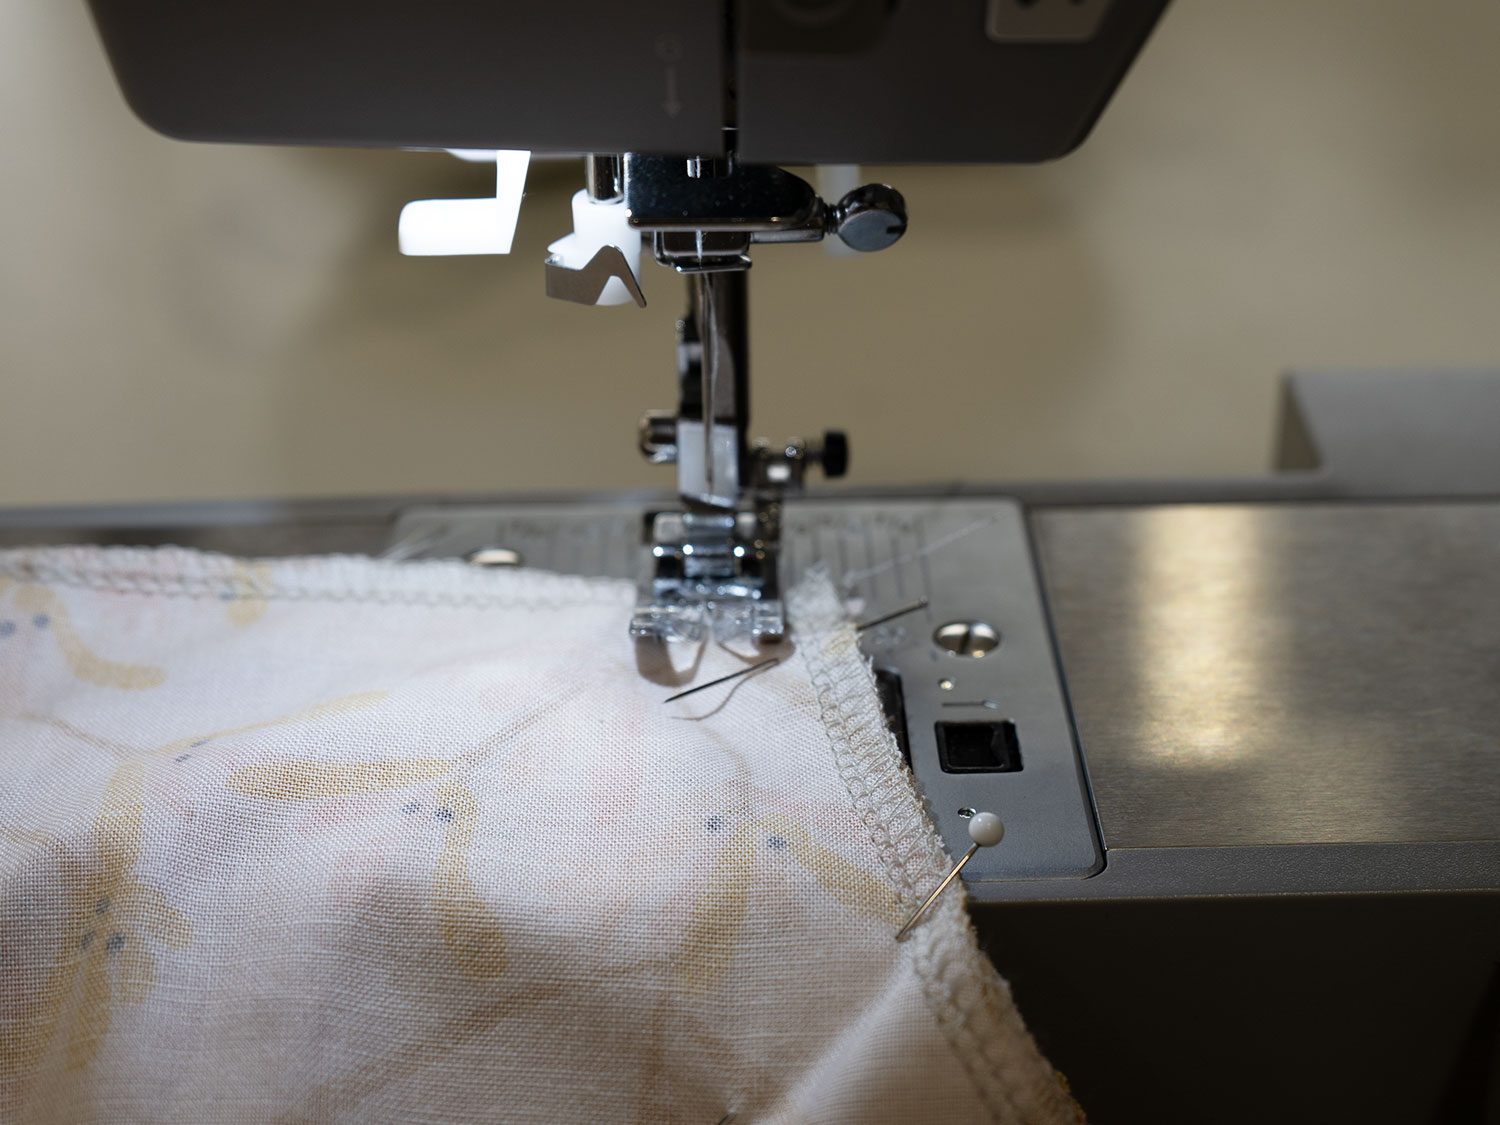 raglan 2 stitching seams with a Singer sewing machine